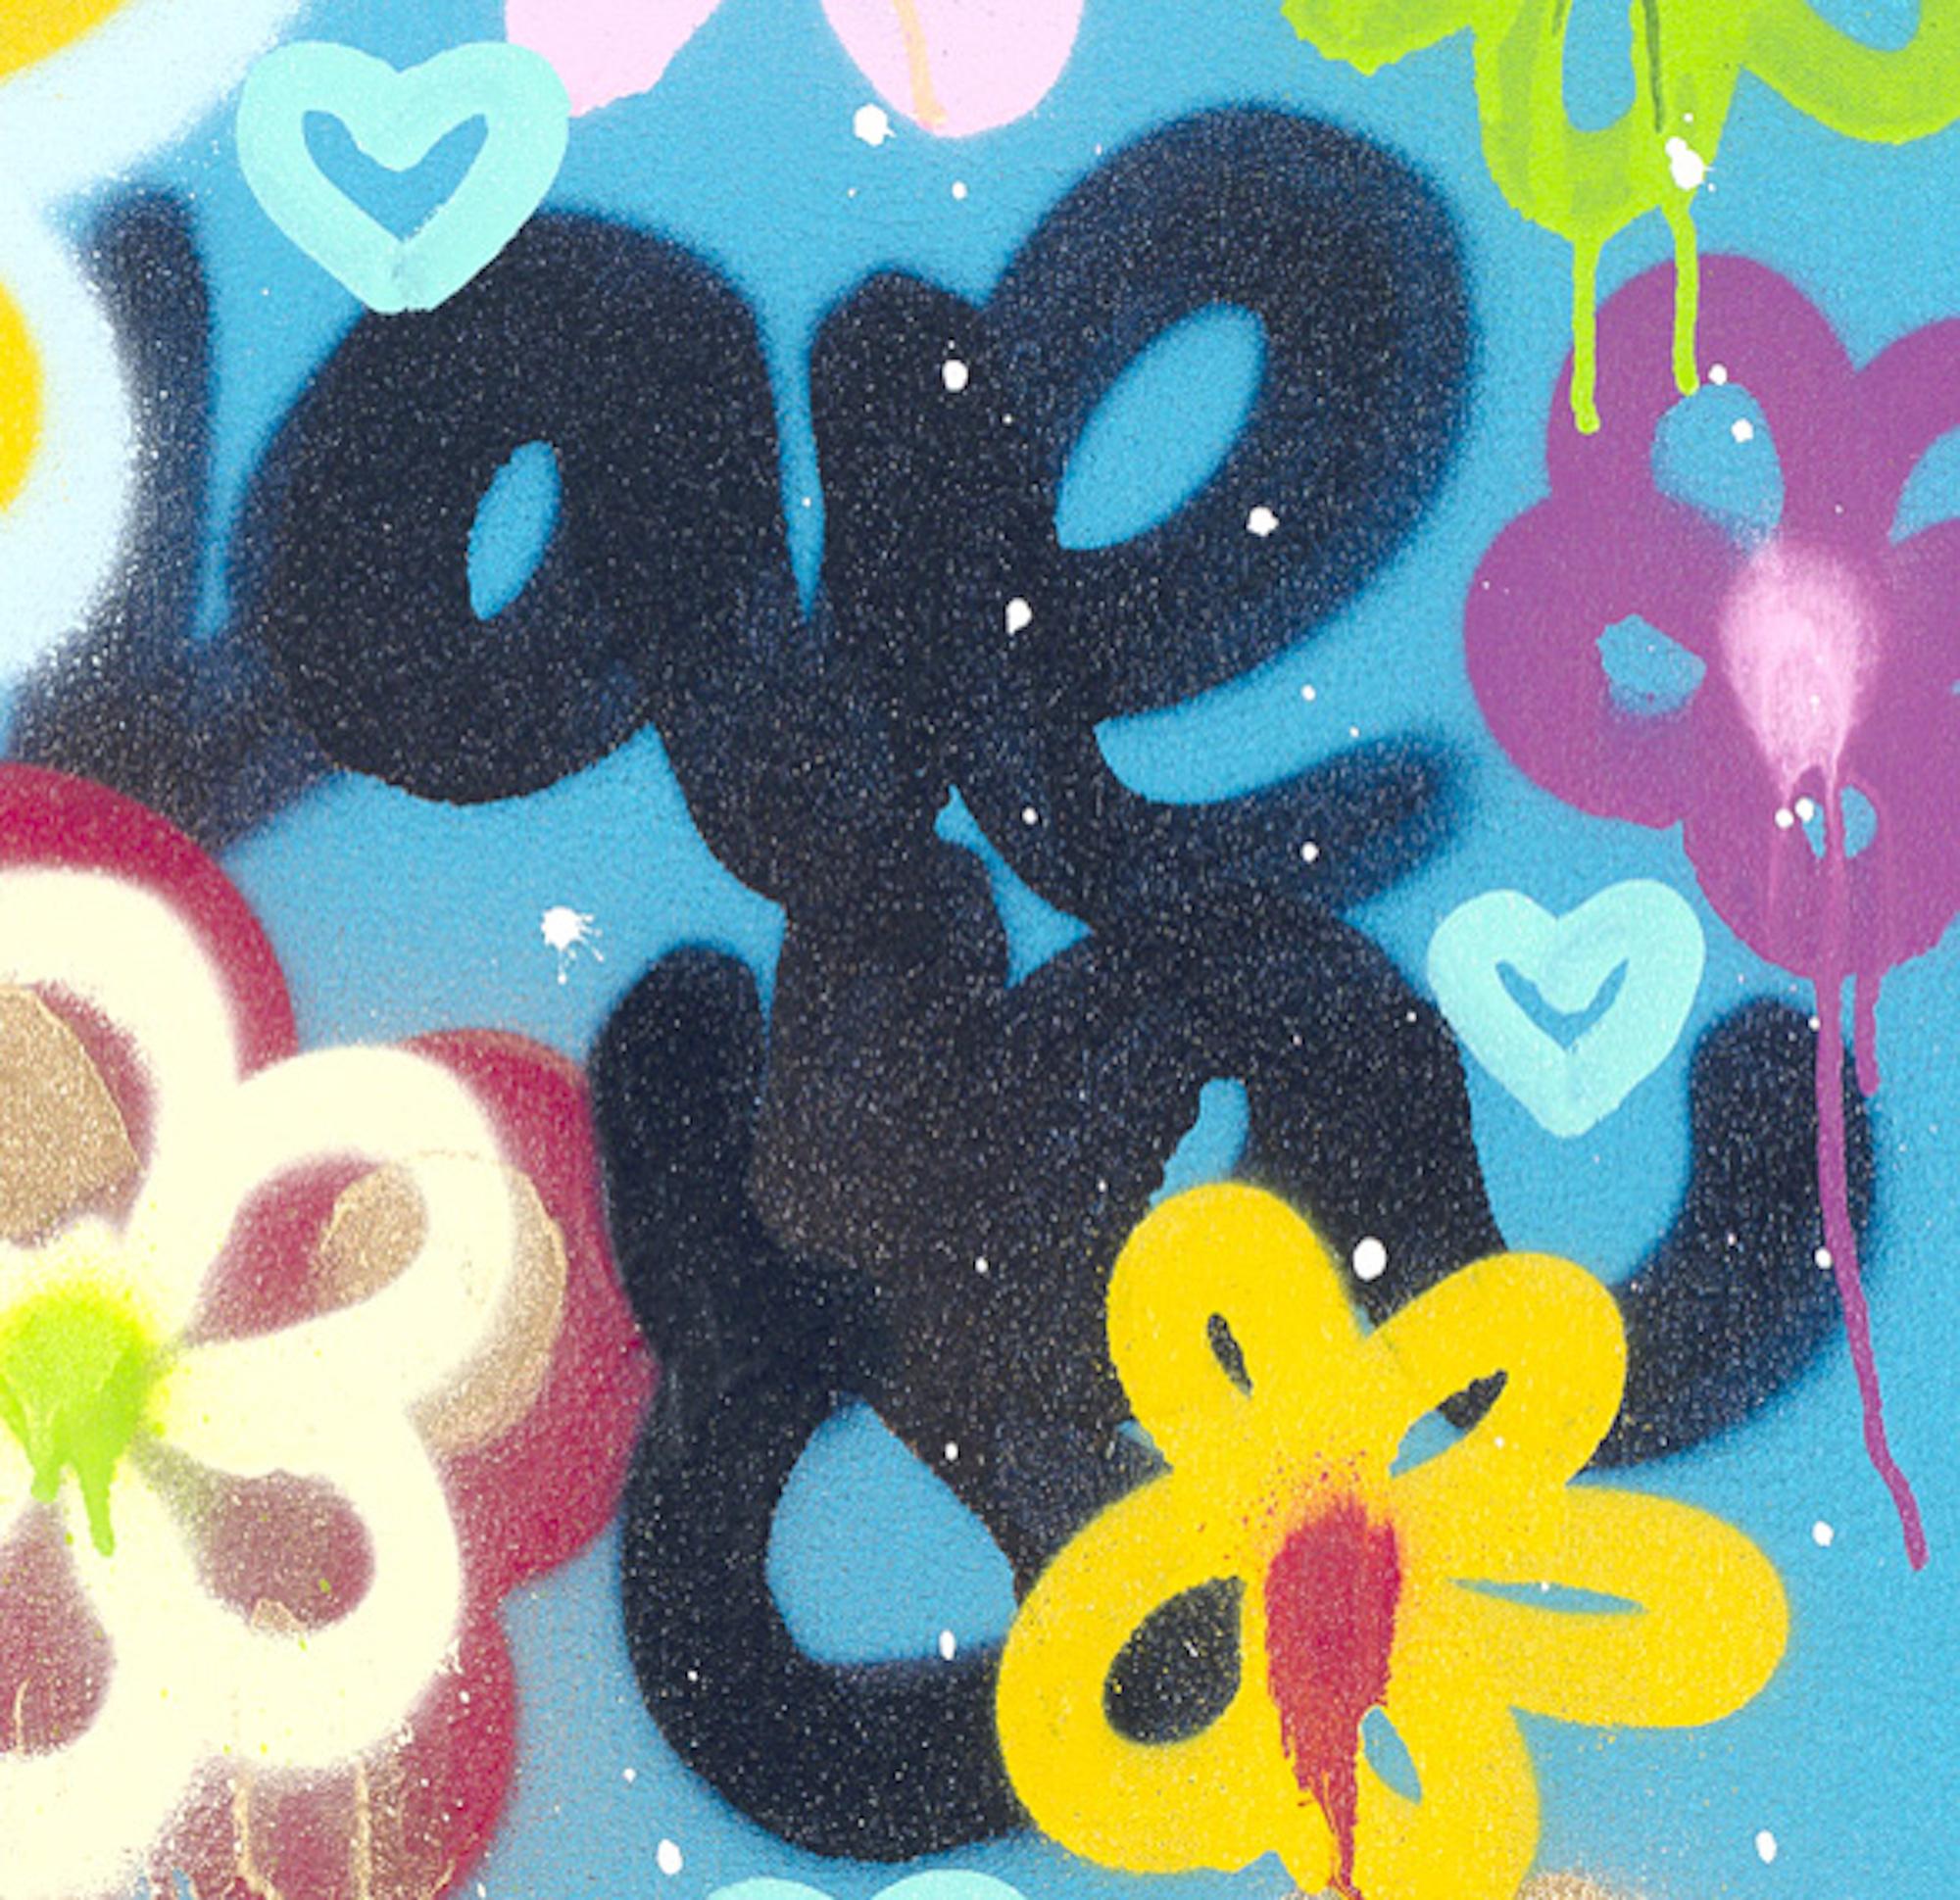 graffiti flowers